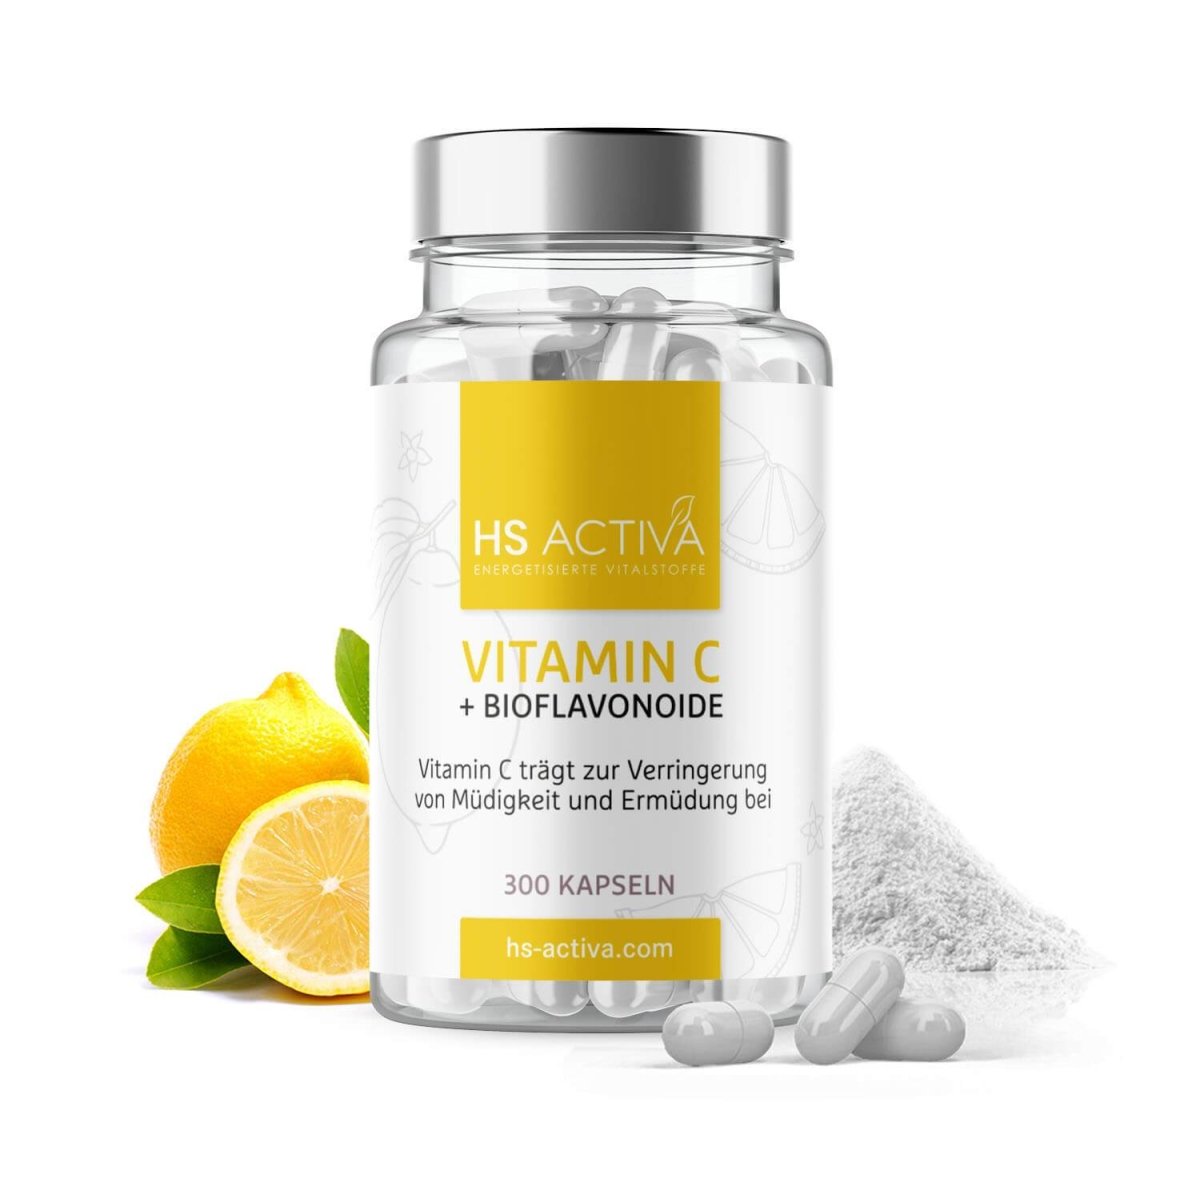 Immun Booster Paket (Vitamin C + Vitamin D3+K2 + MAP Amino) - HS Activa